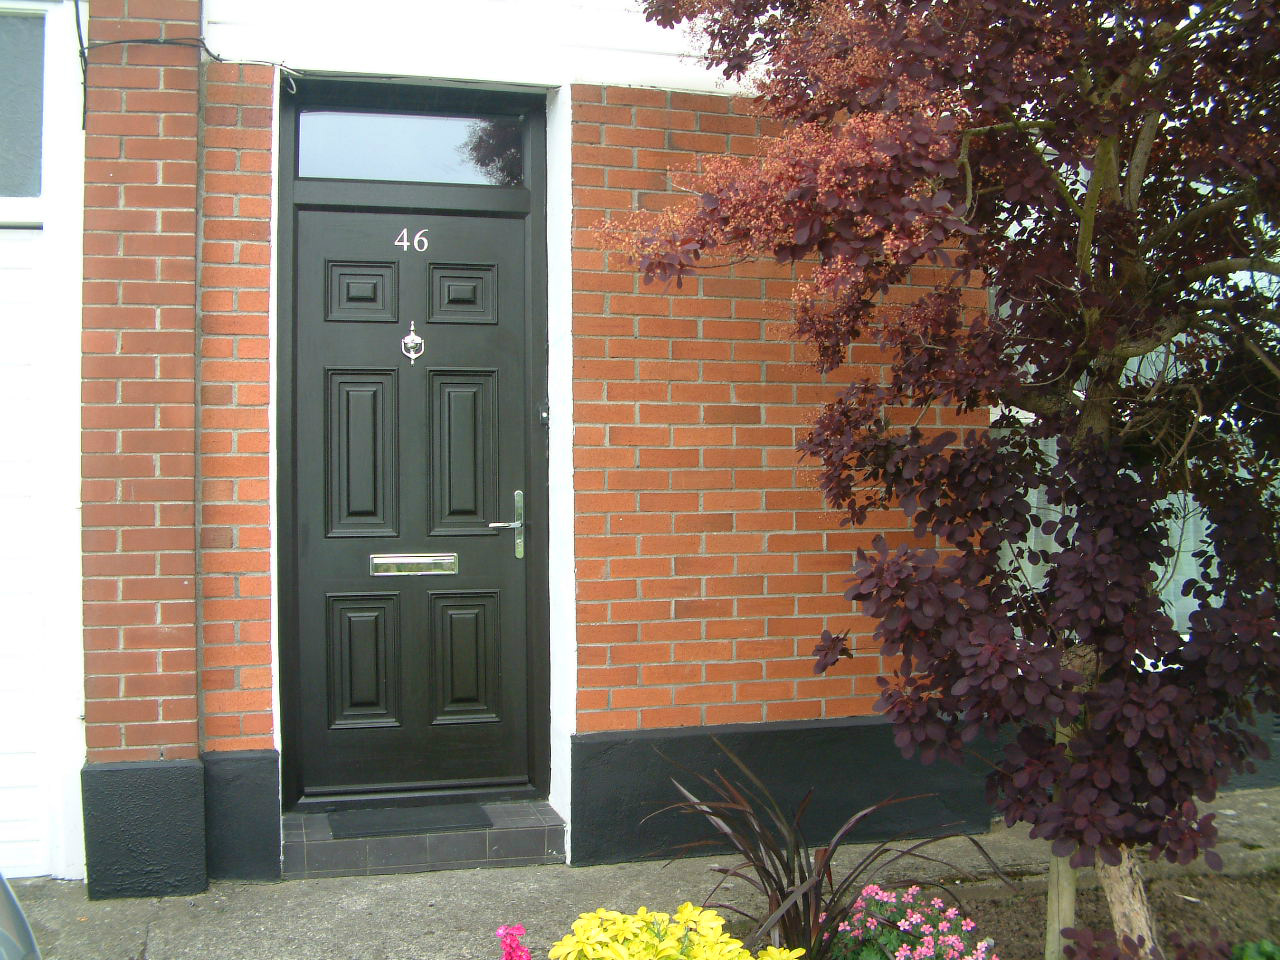 BLACK PALLADIO GEORGIAN FRONT COMPOSITE DOOR FITTED BY ASGARD WINDOWS IN DUBLIN 18.